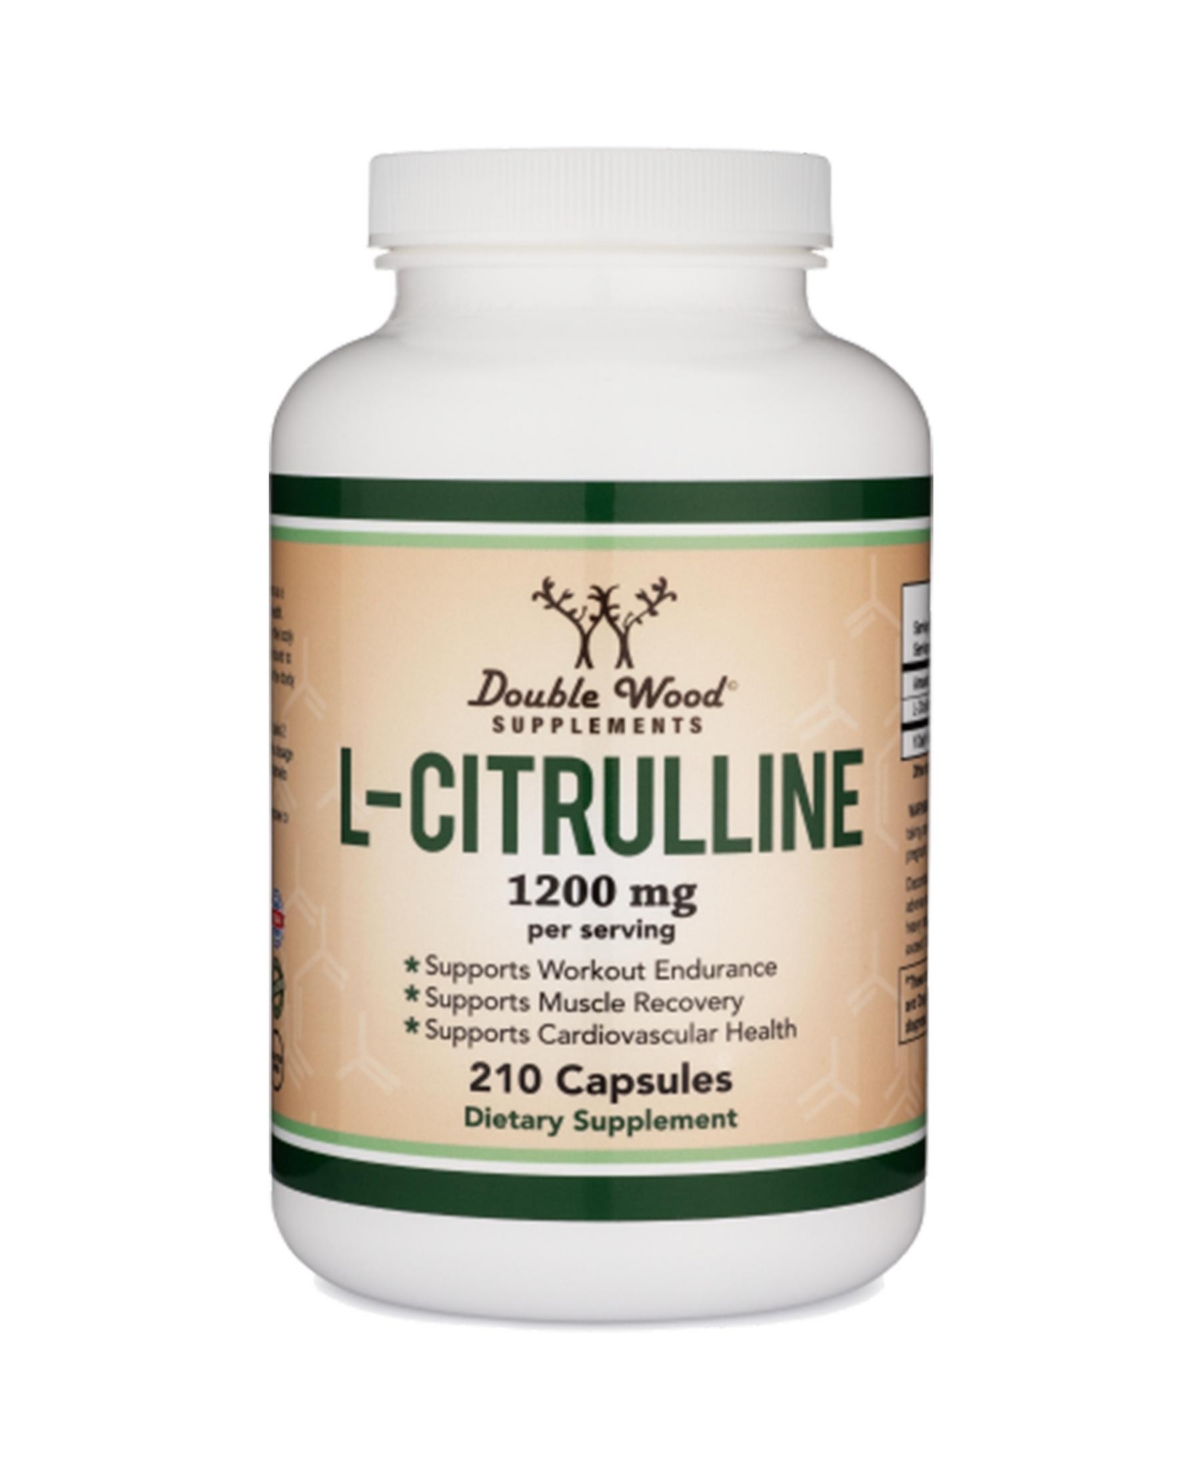 L-Citrulline - 210 capsules, 1200 mg servings